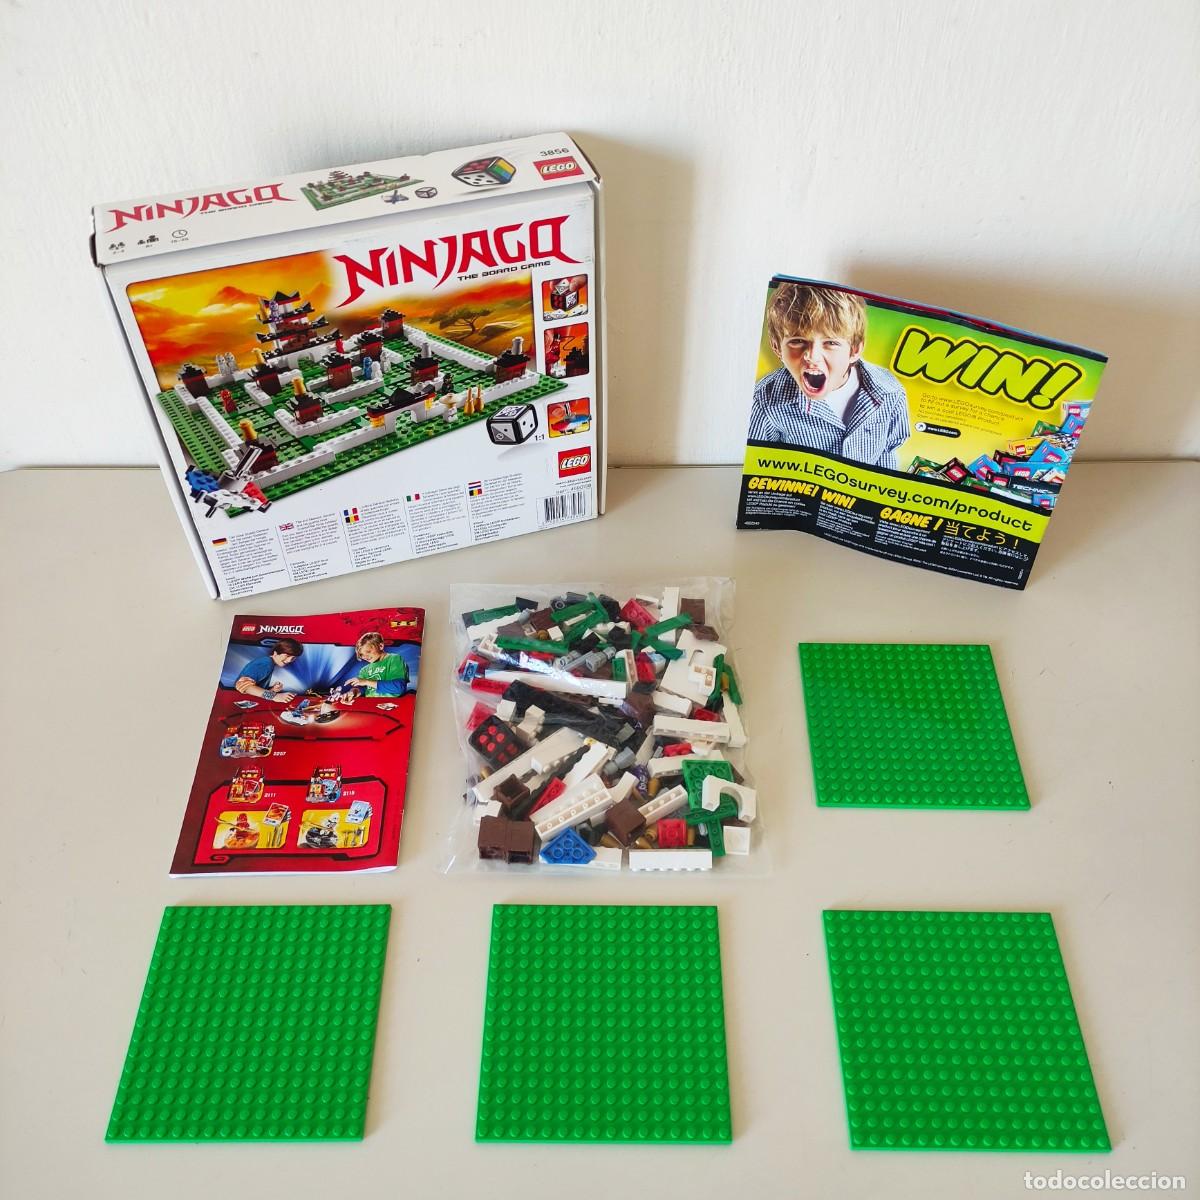 lego 3856 ninjago gioco da tavolo ~ 100% comple - Buy Lego toys